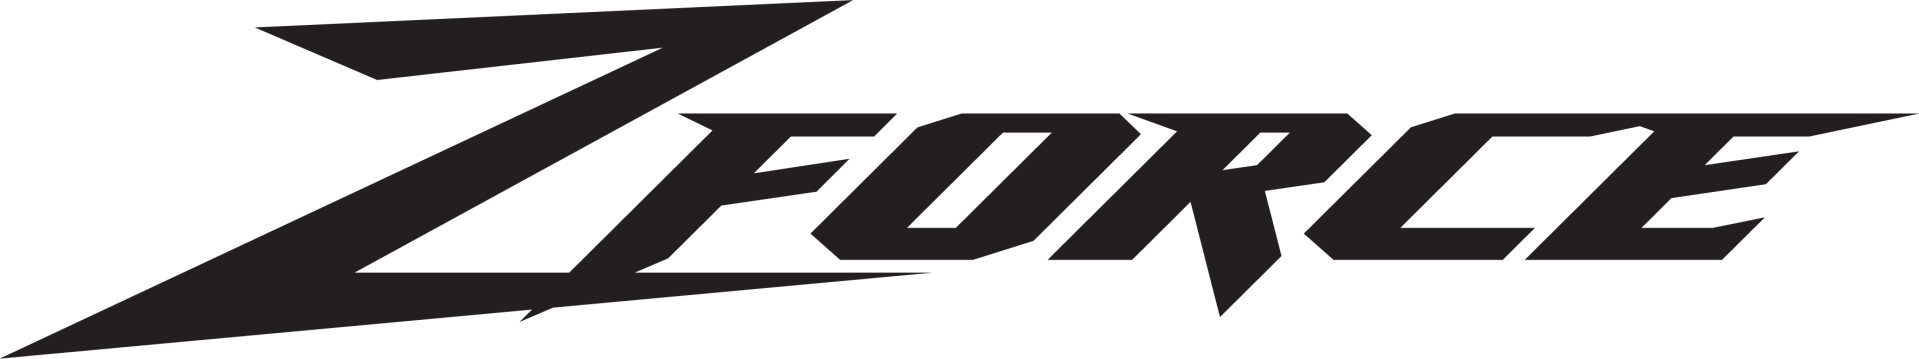 ZFORCE 950 H.O. EX Logo